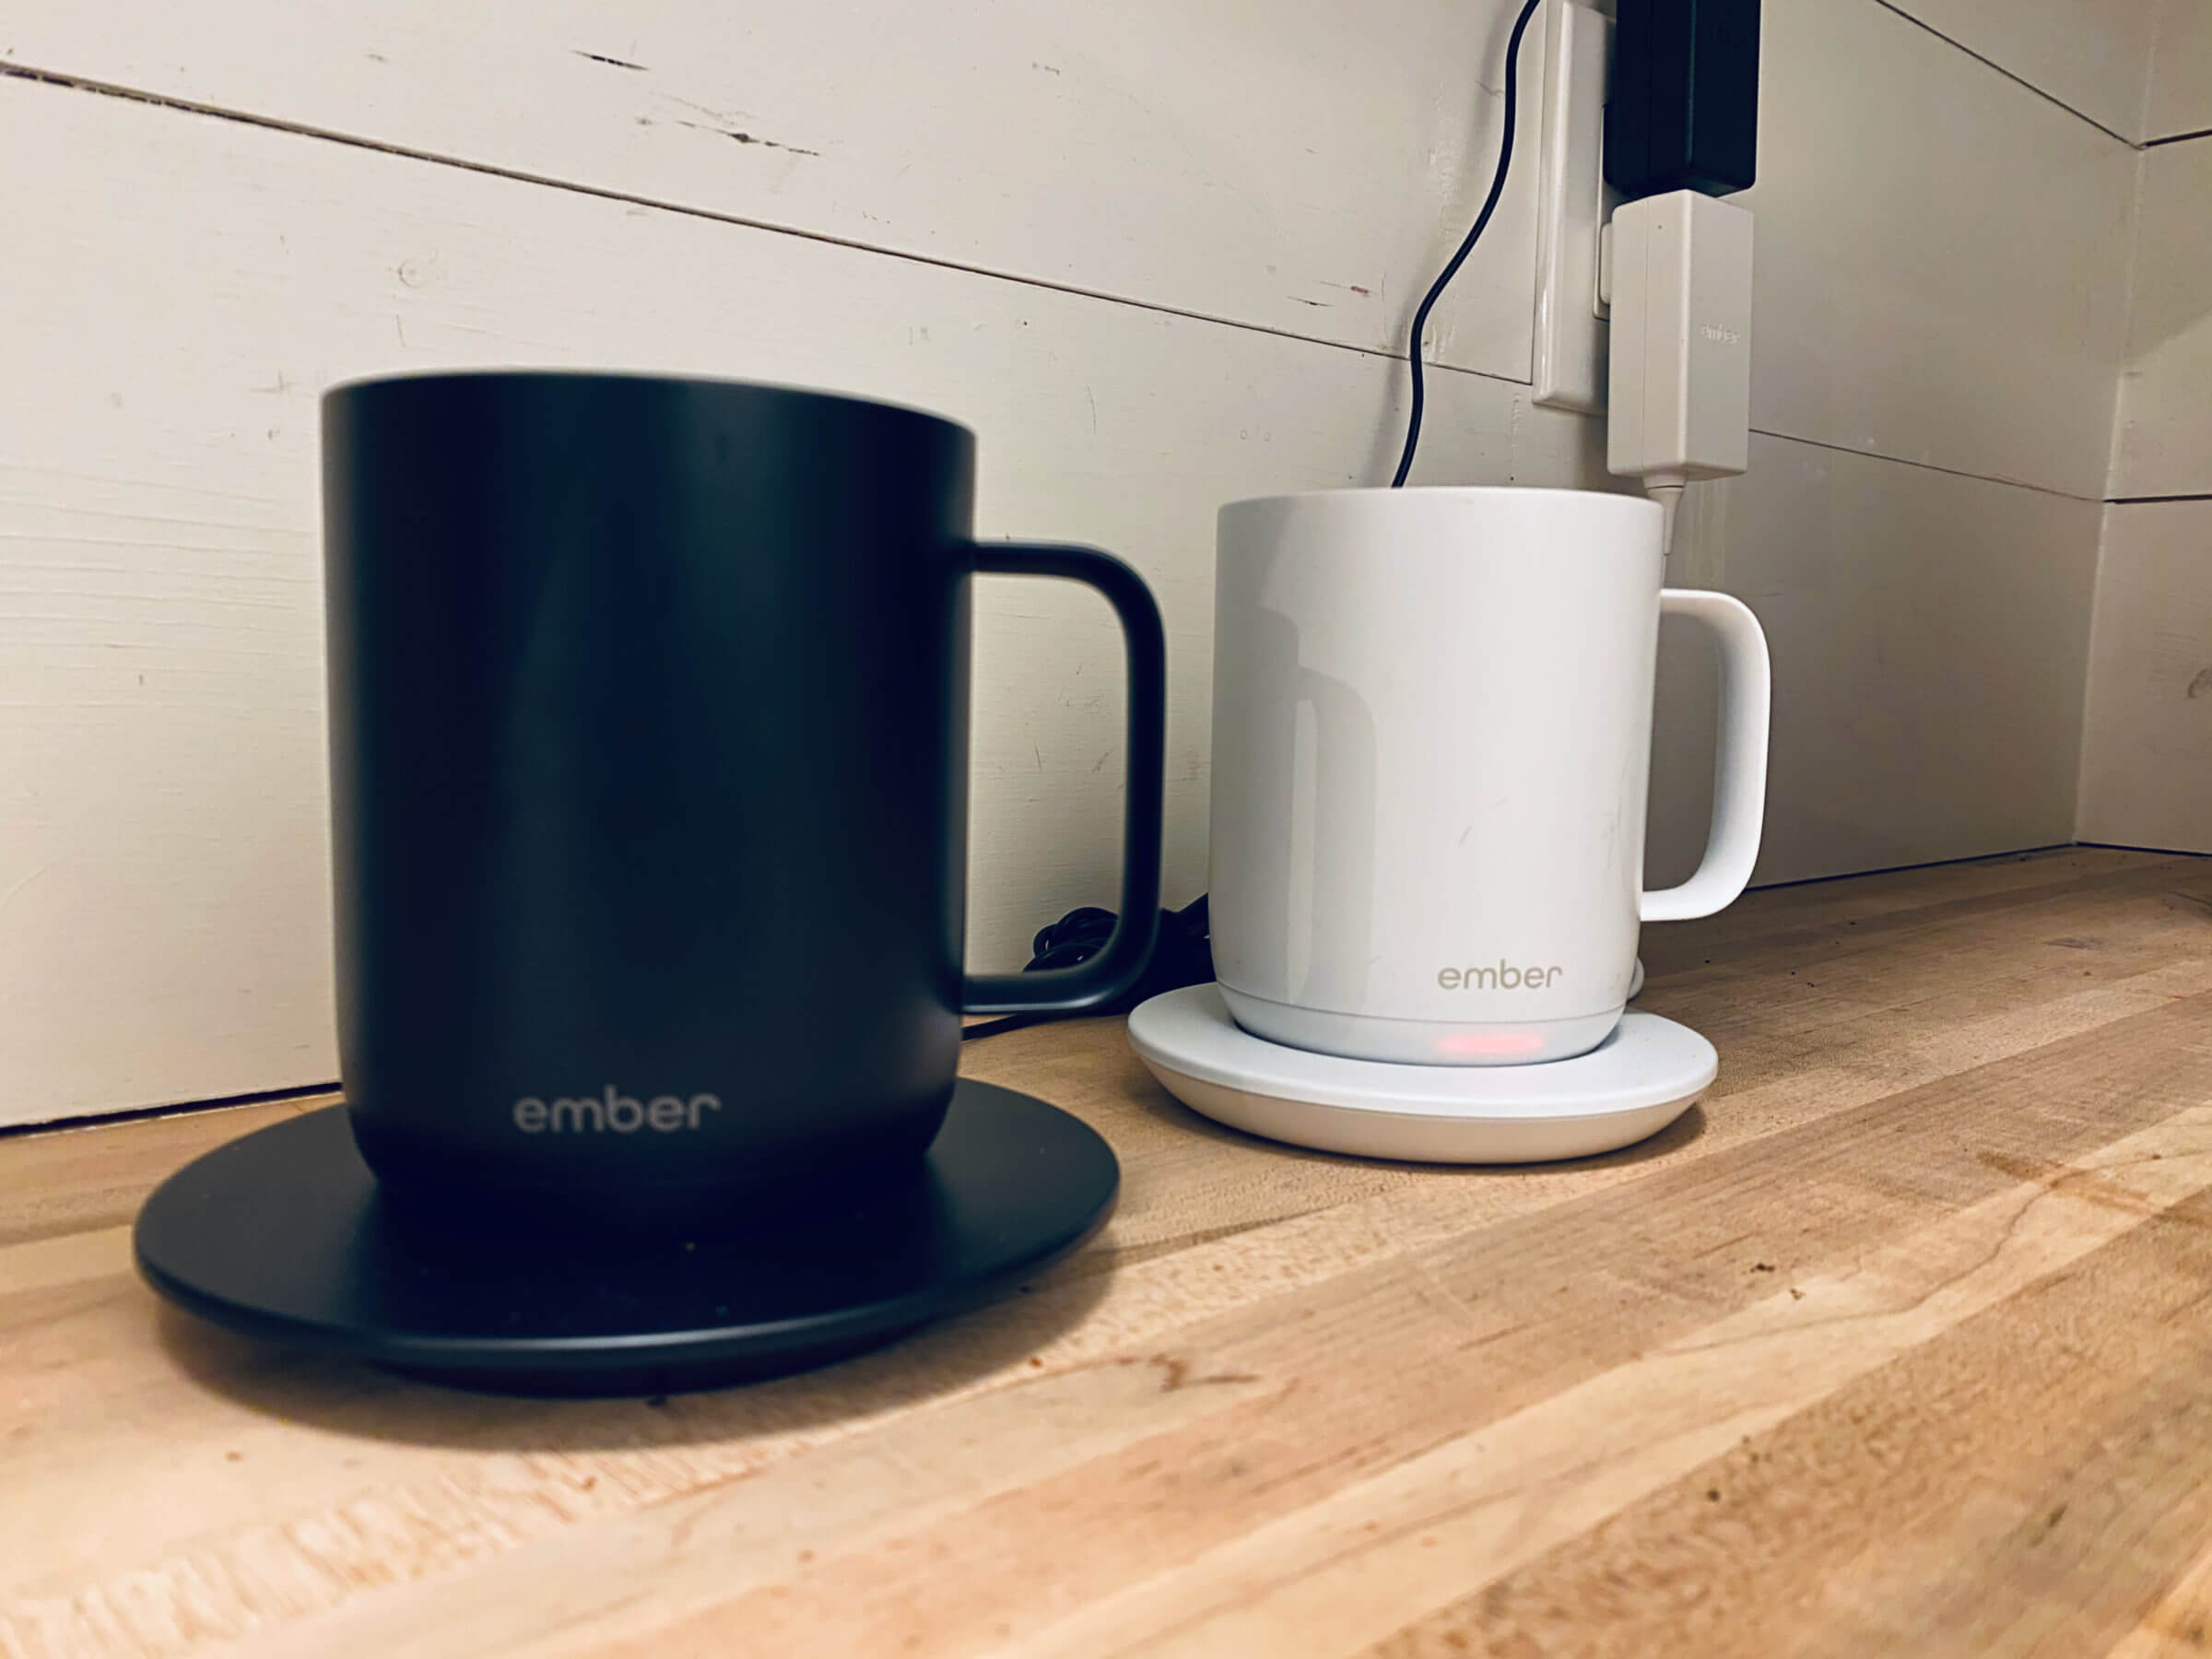 Ember Travel Mug 2 VS ThermoJoe Travel Mug: Don't Make a Mistake! 